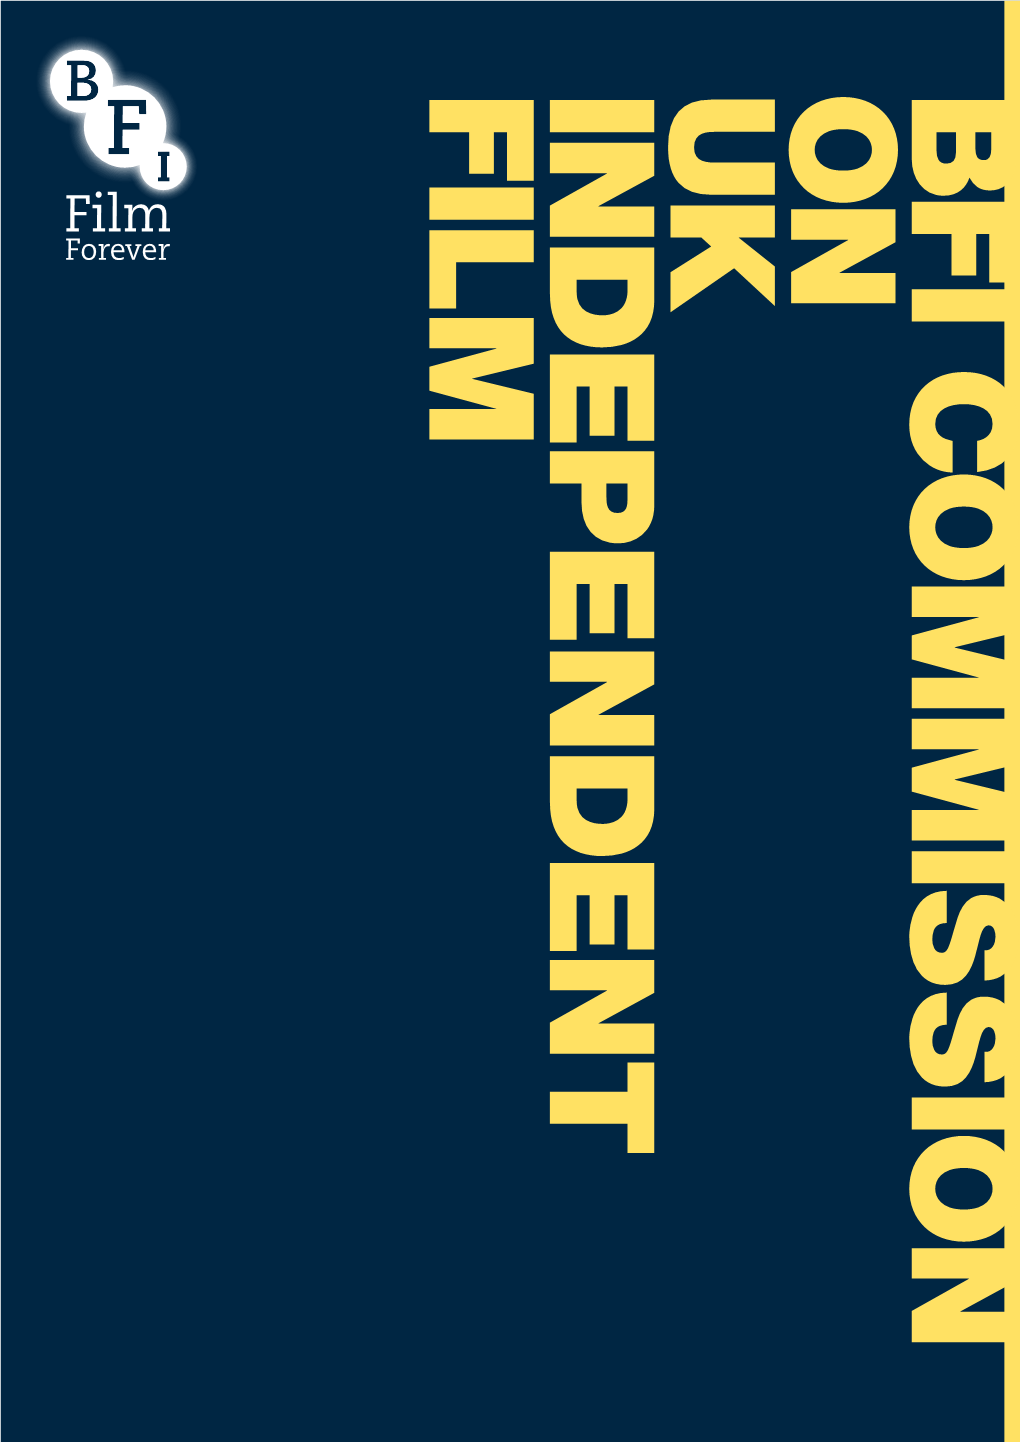 BFI's Independent Film Commission